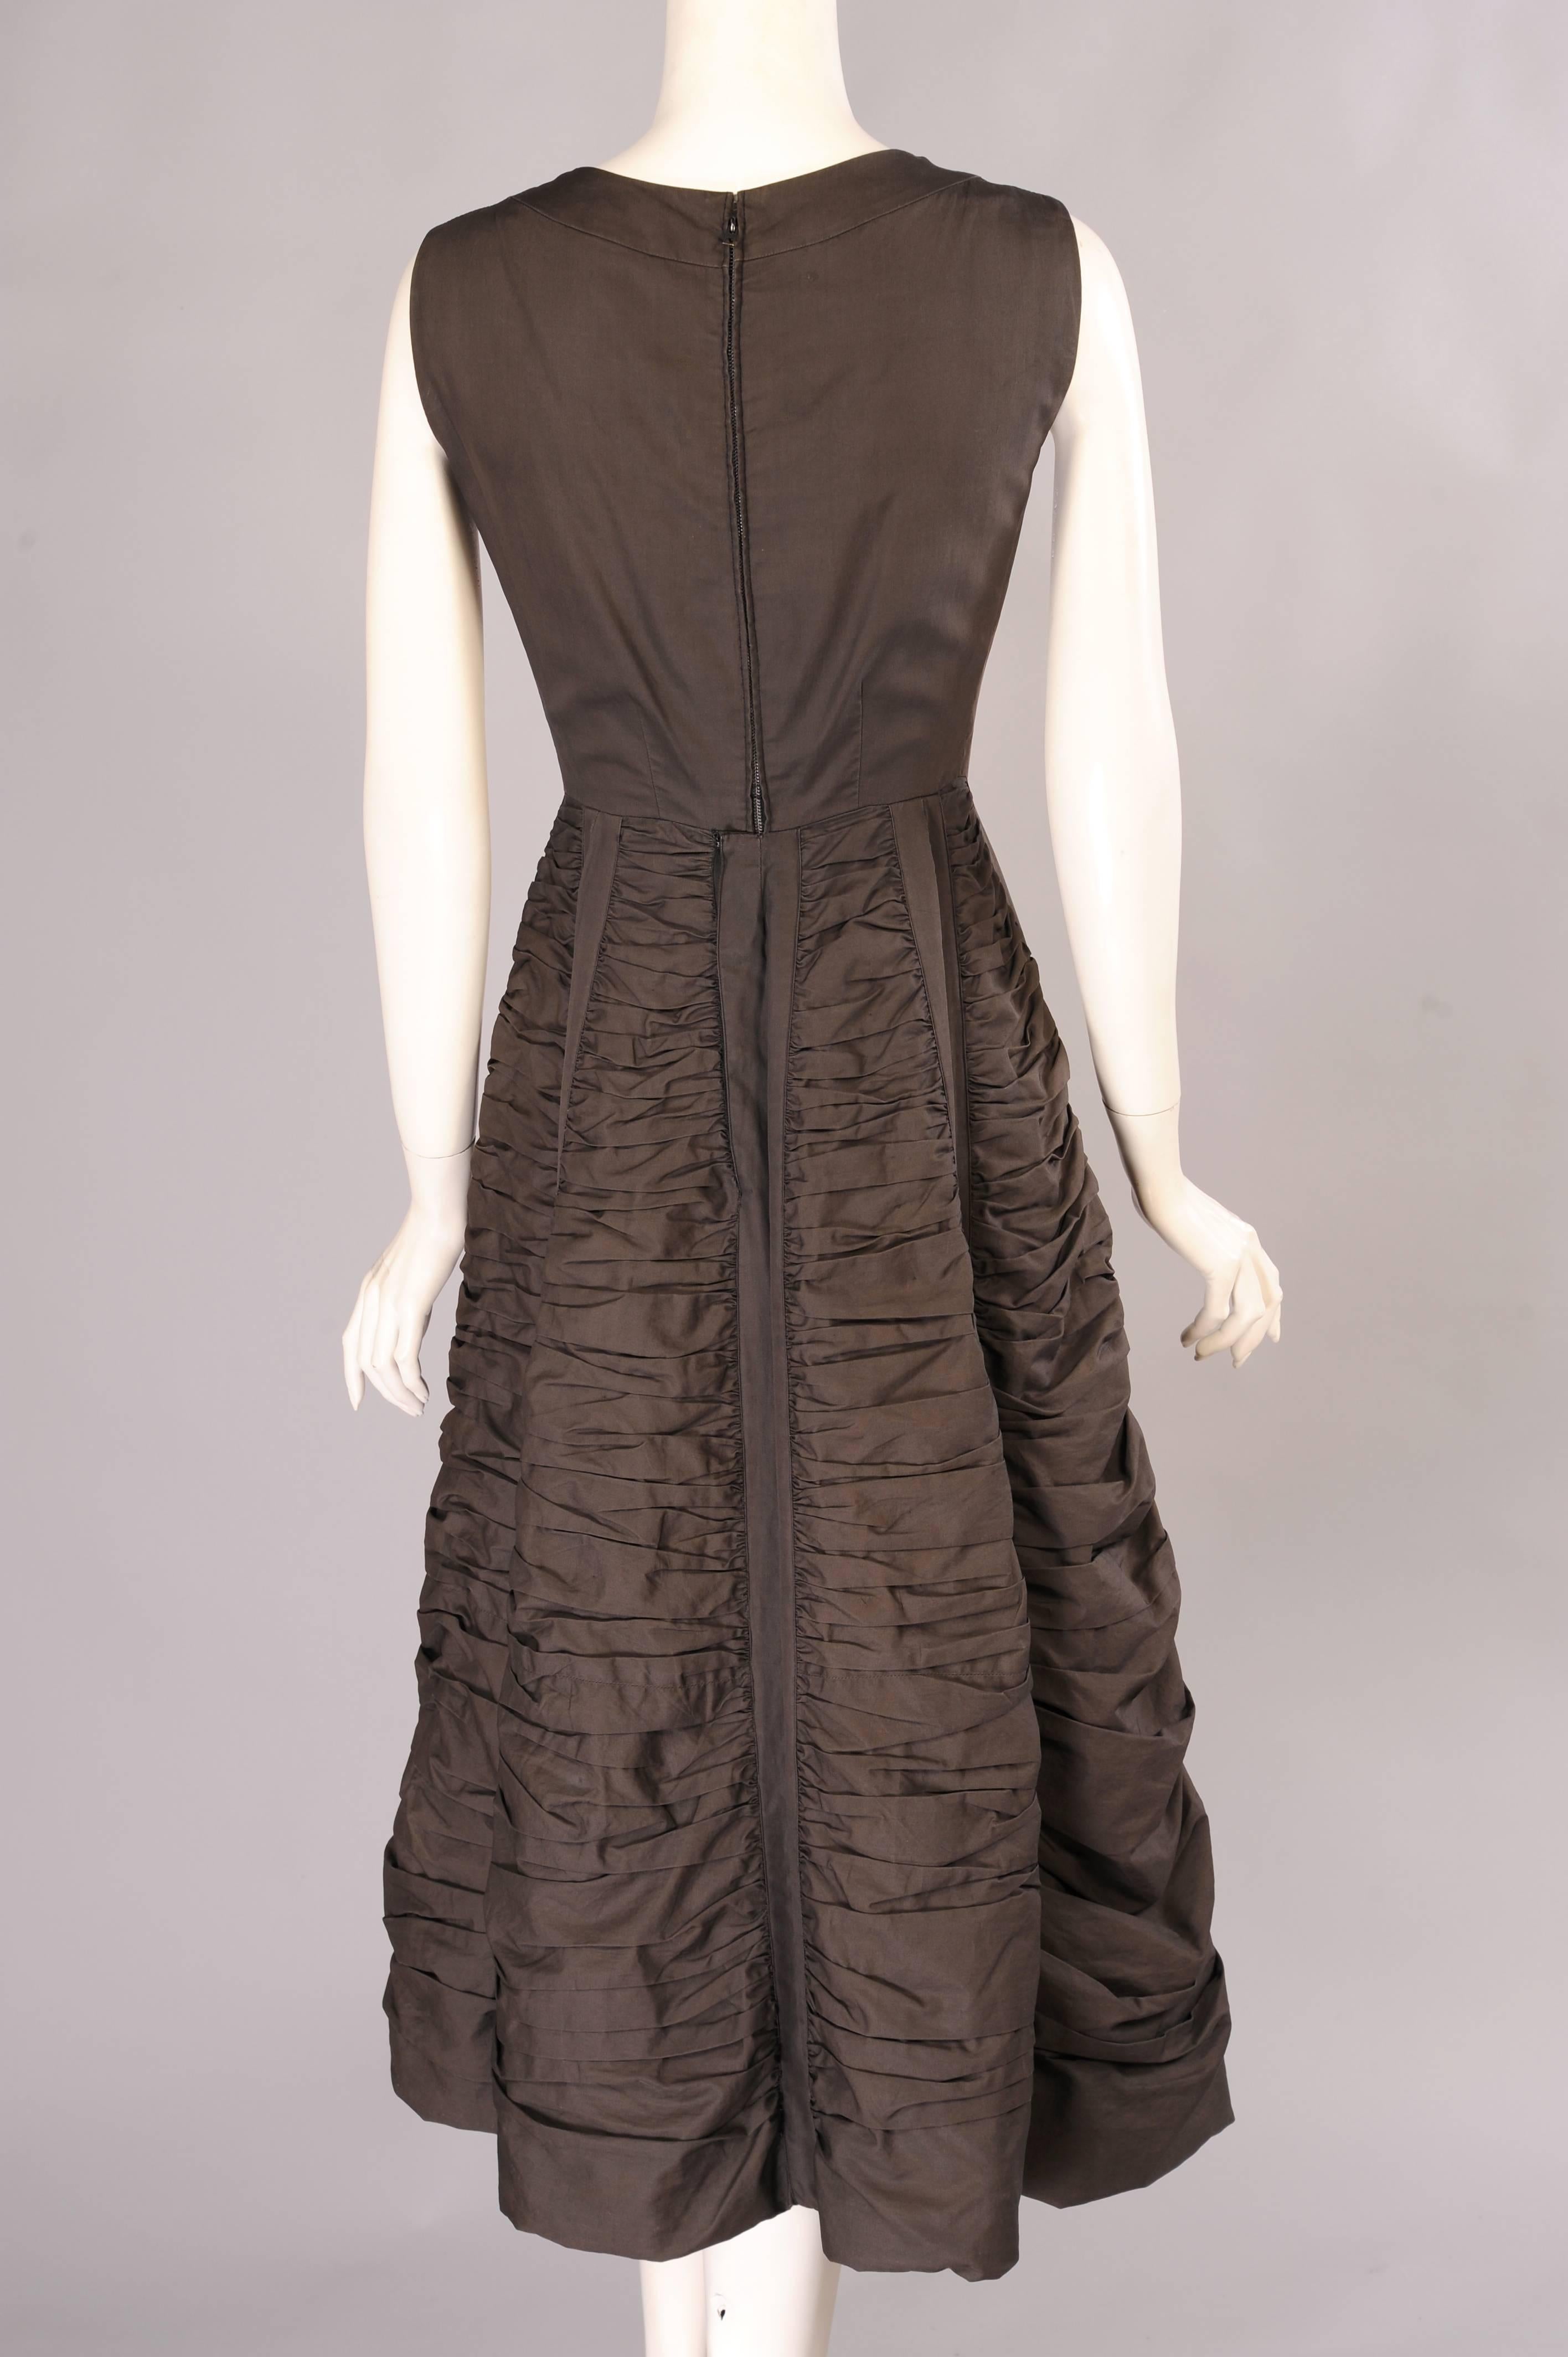 Black 1950's Jacques Heim Dress, Authorized Copy by Maria Carine